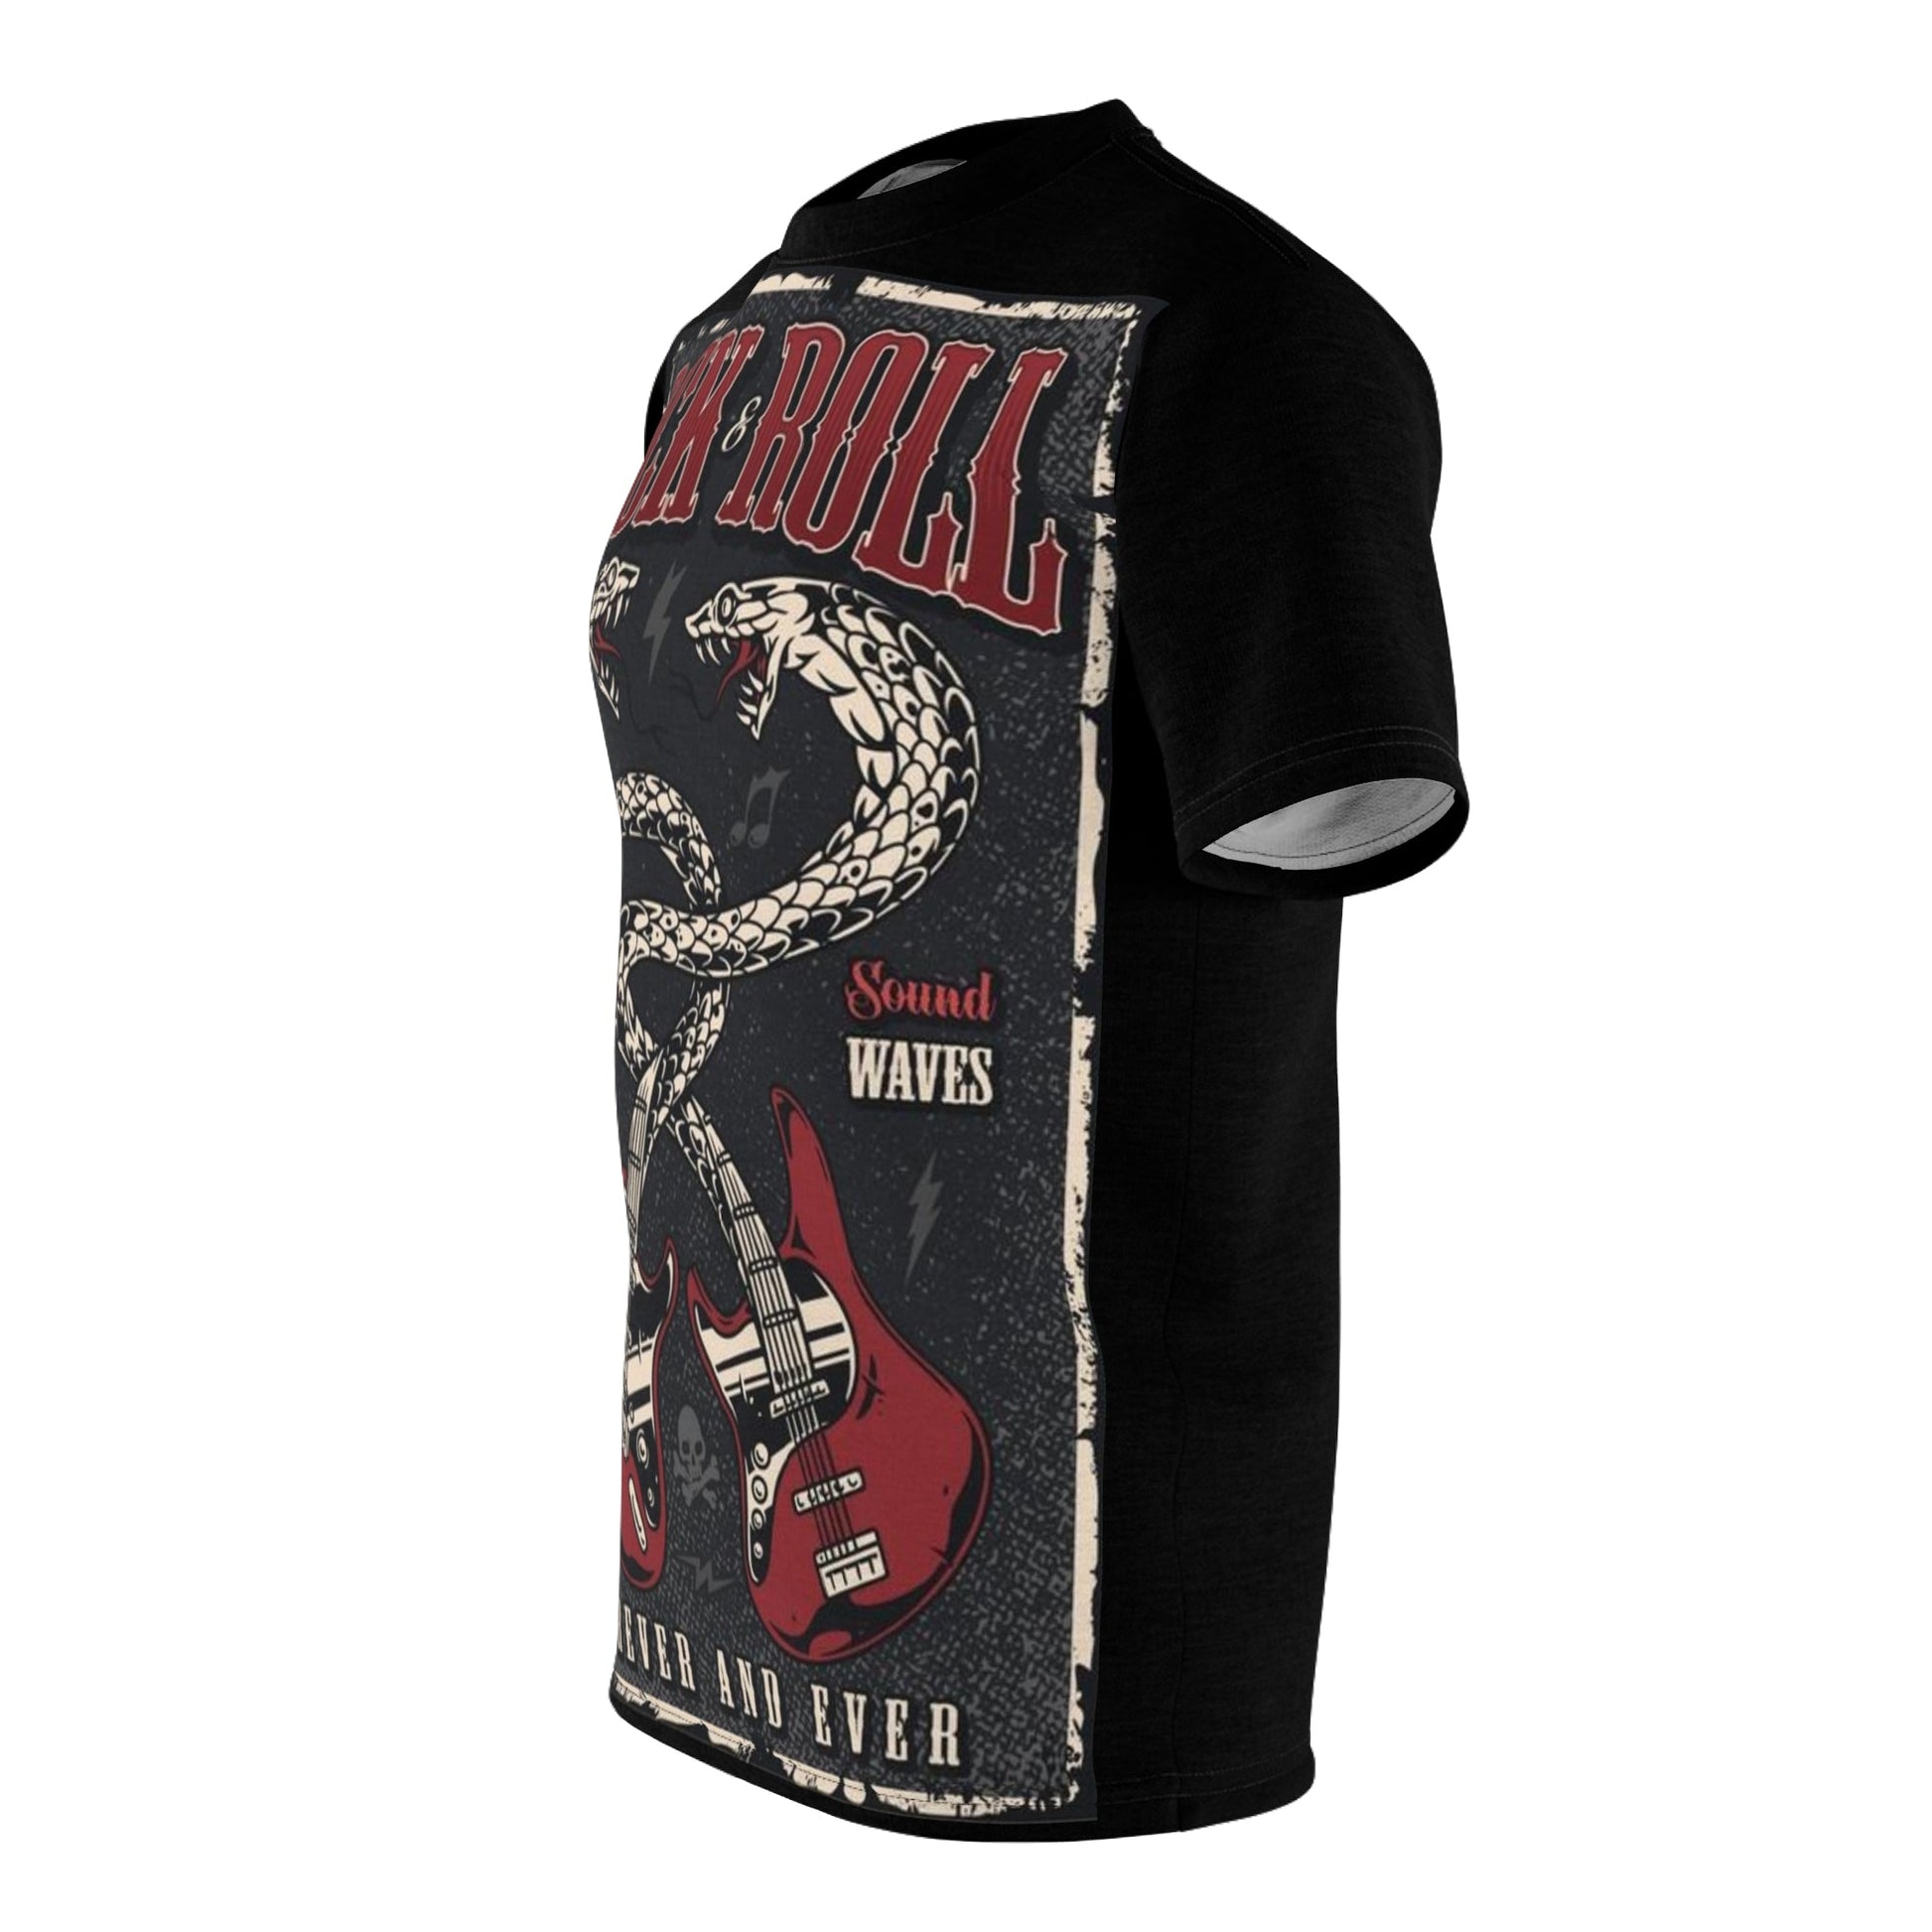 Rock & Roll Forever and Ever Snake Guitars Unisex Cut & Sew Tee (AOP) - Lizard Vigilante